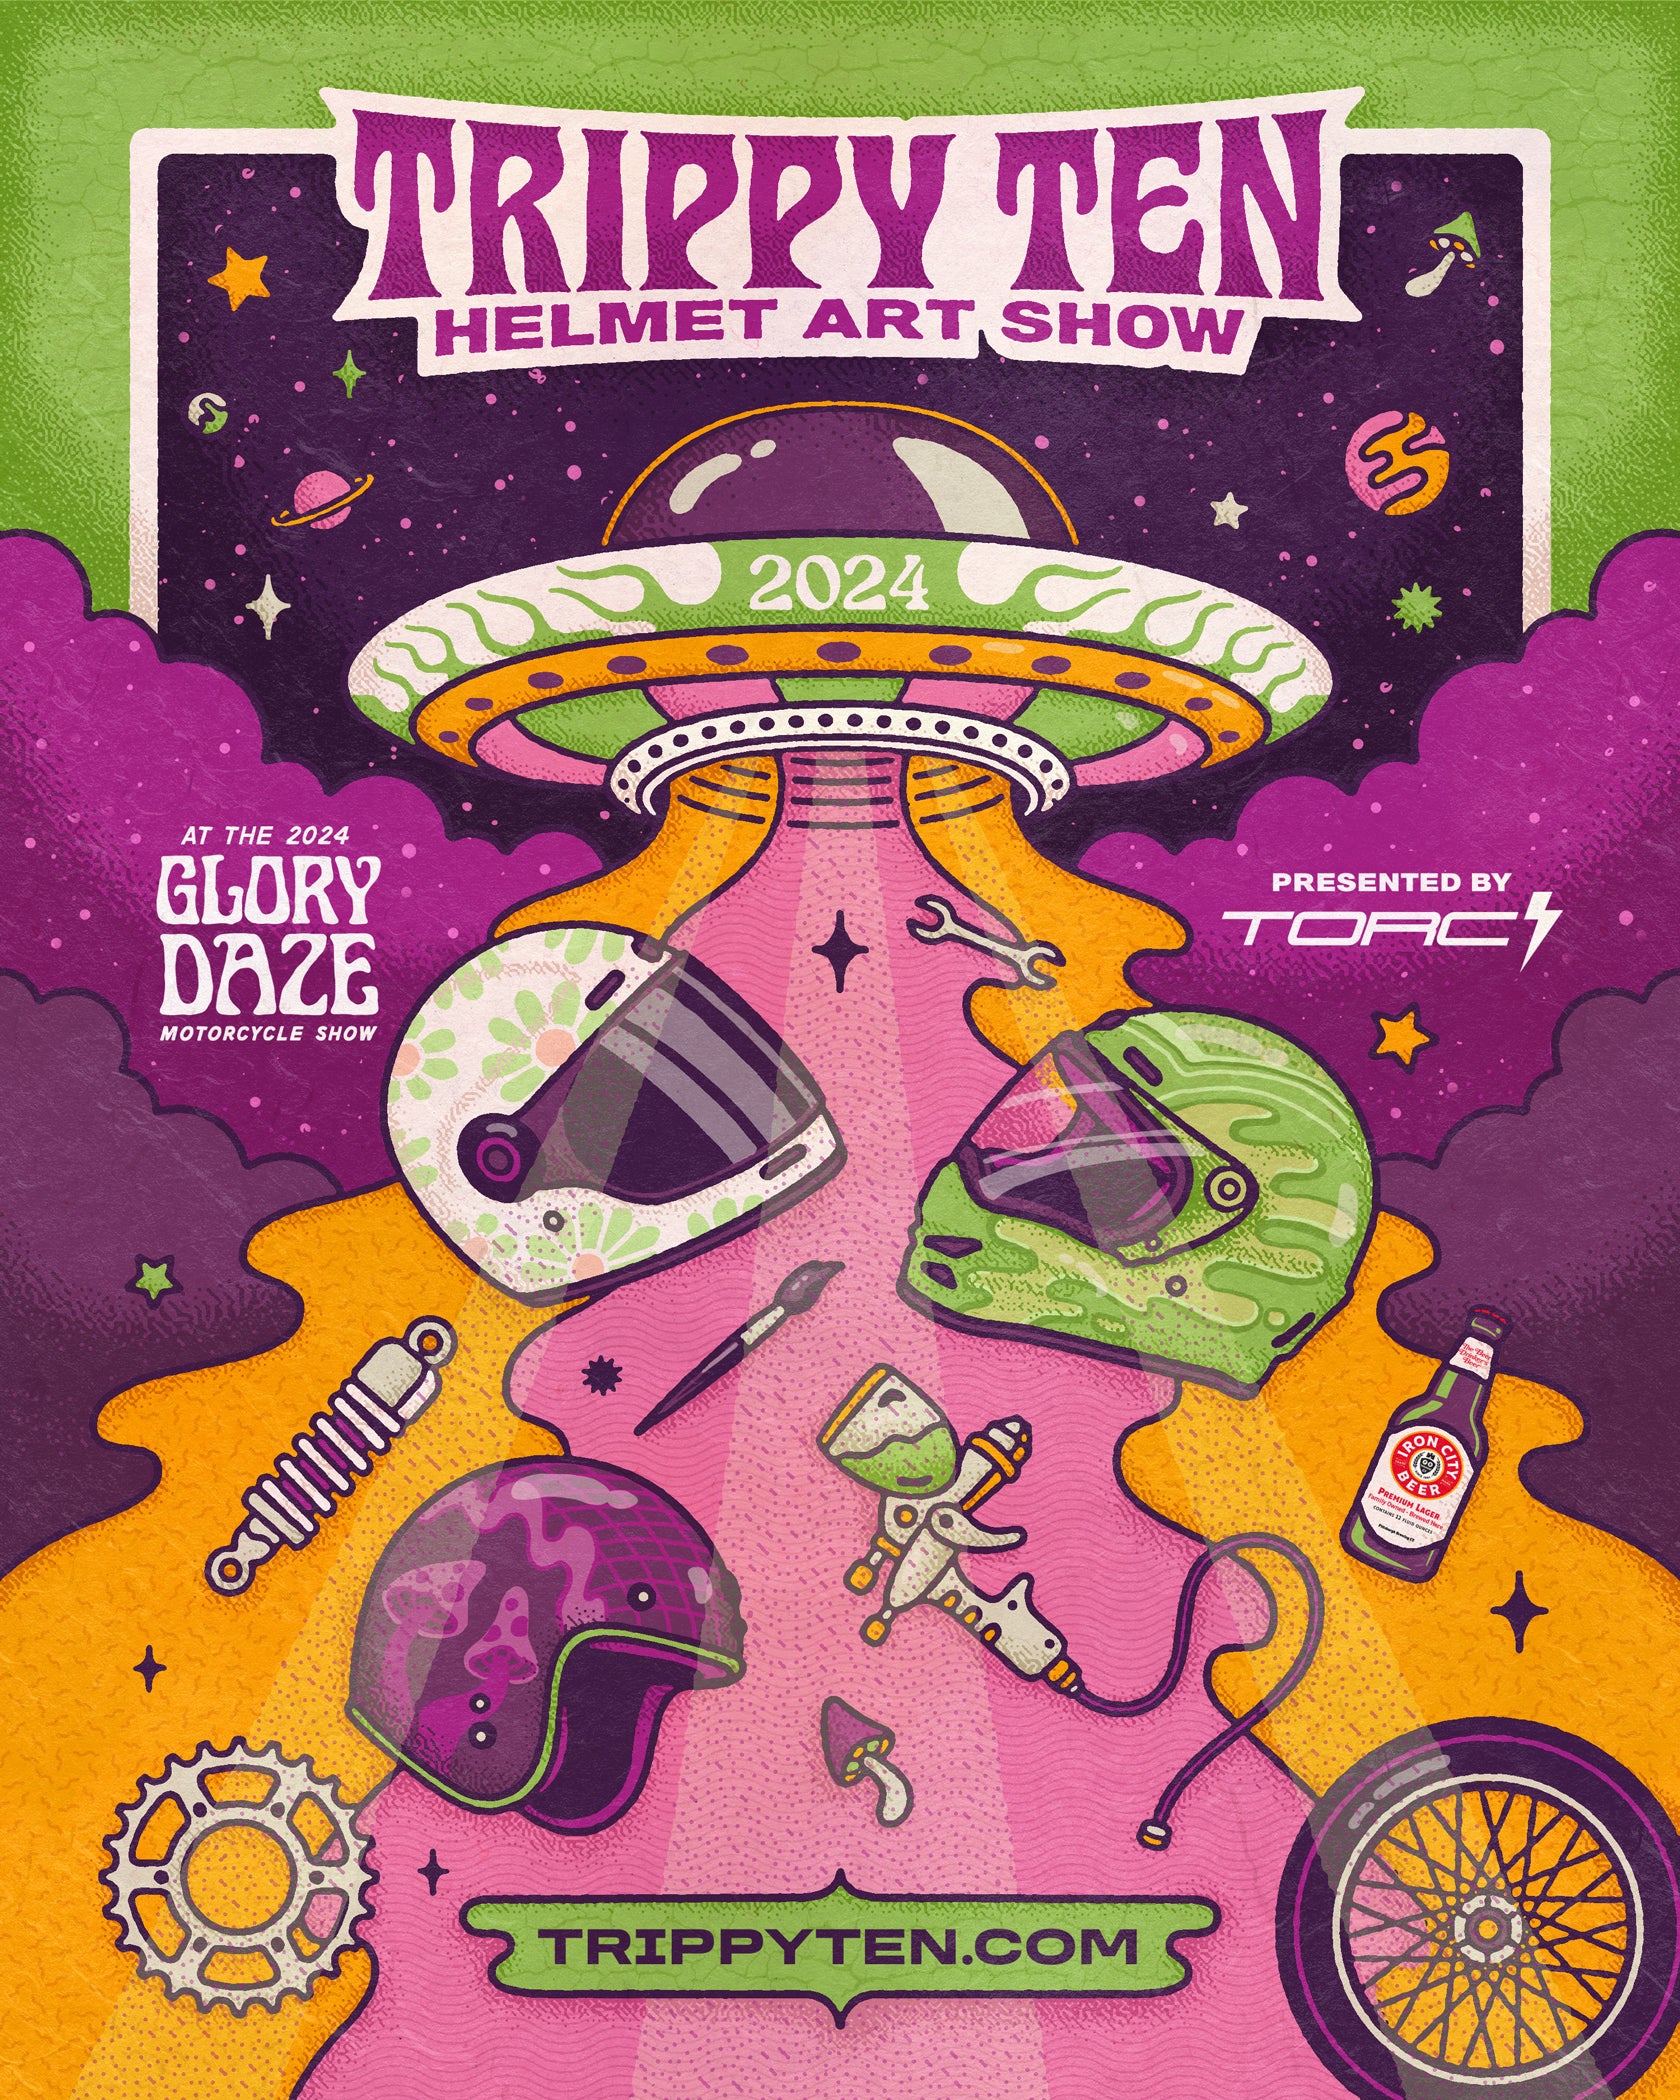 Kurt Diserio artist designer illustration poster Glory Daze motorcycle show Trippy Ten helmet pittsburgh